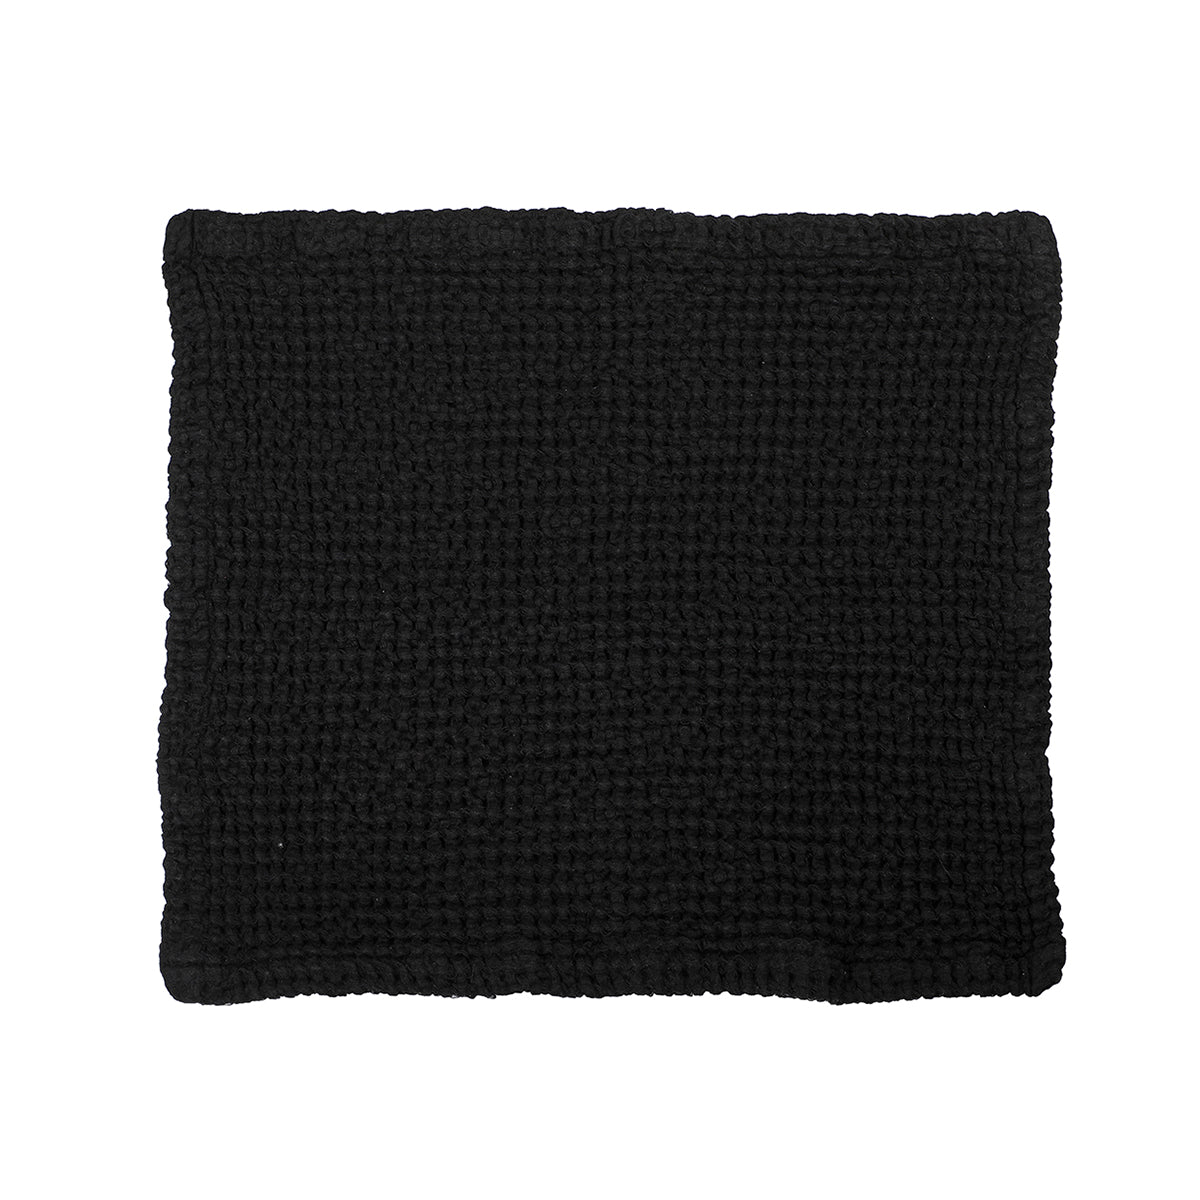 Nuppu face towel, black